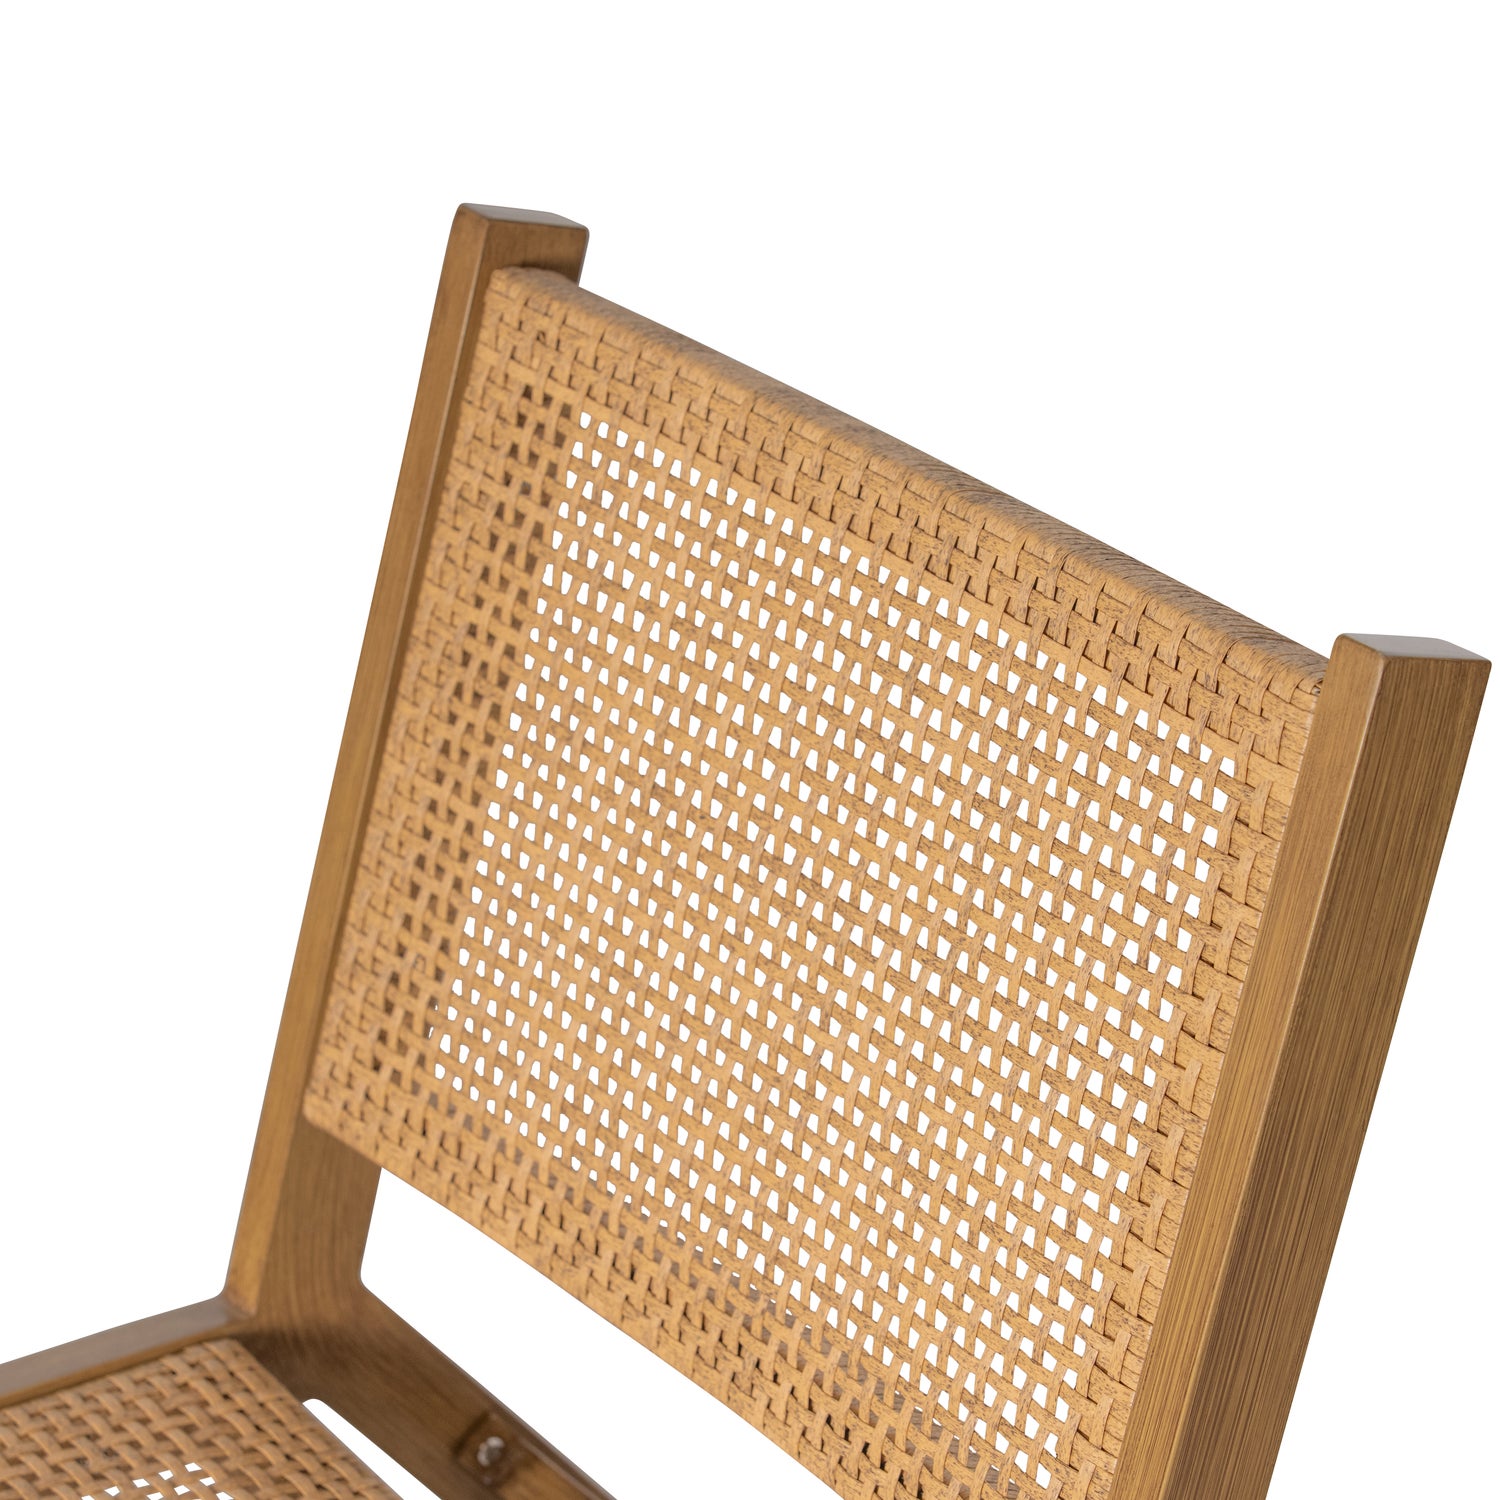 377166-N-02_VS_FA_Puk_fauteuil_aluminium_naturel_detail.jpg?auto=webp&format=png&width=1500&height=1500